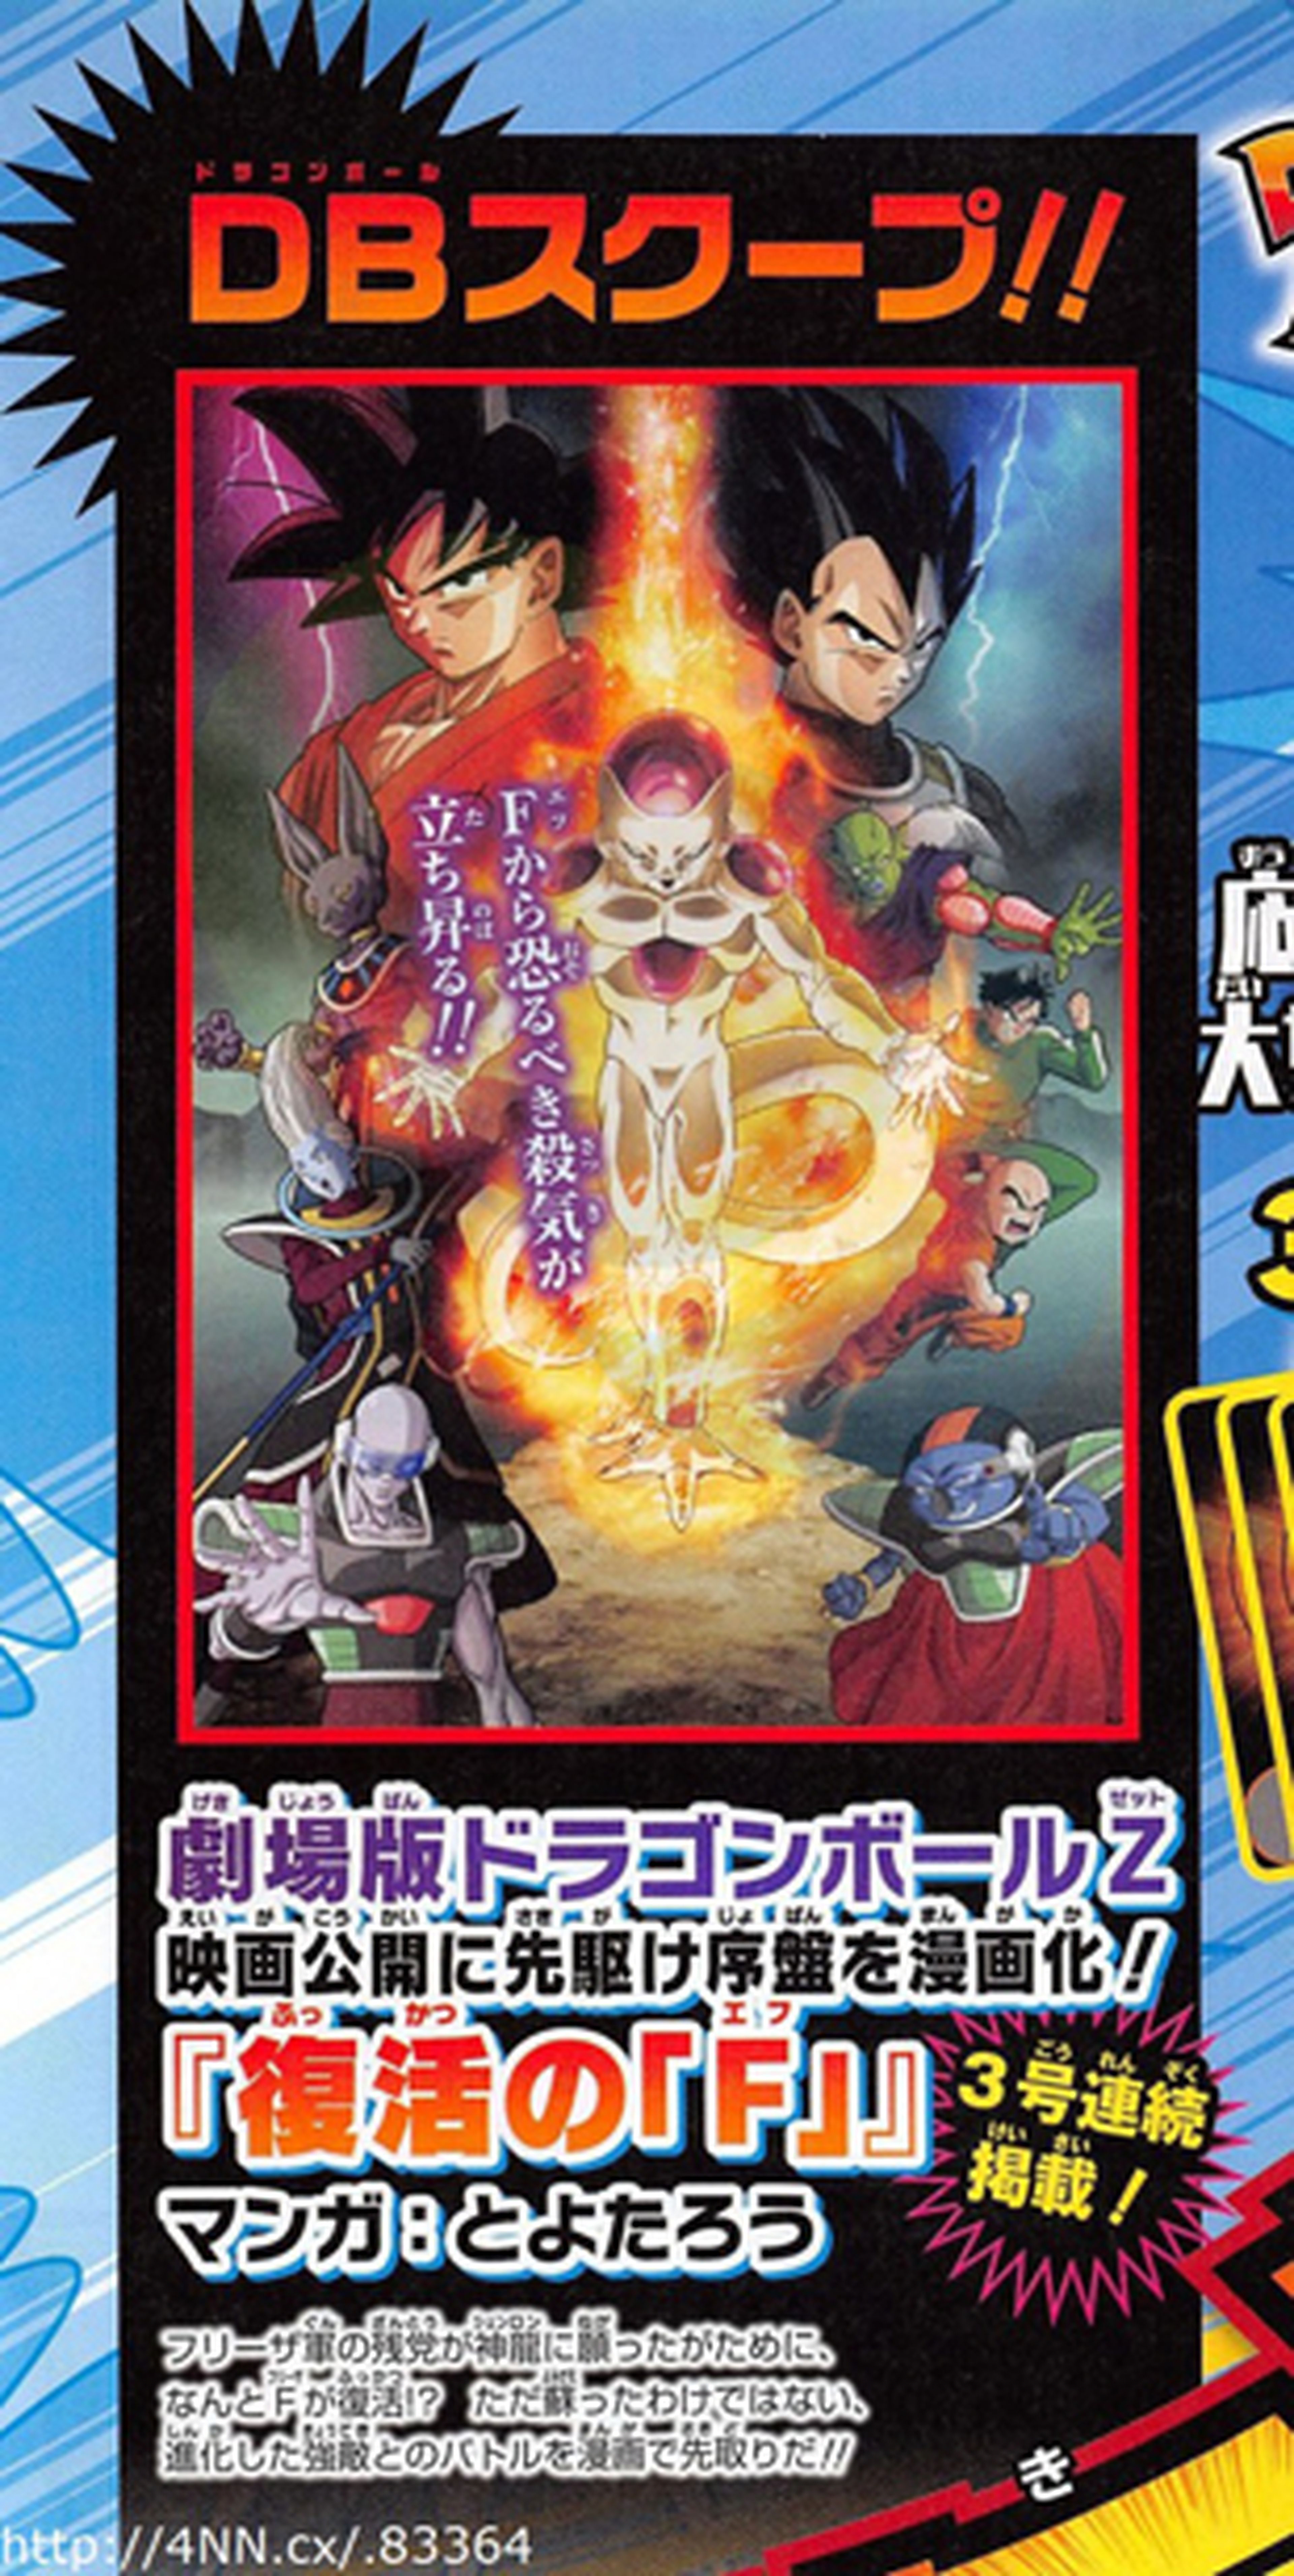 Dragon Ball Z: Fukkatsu no F tendrá manga